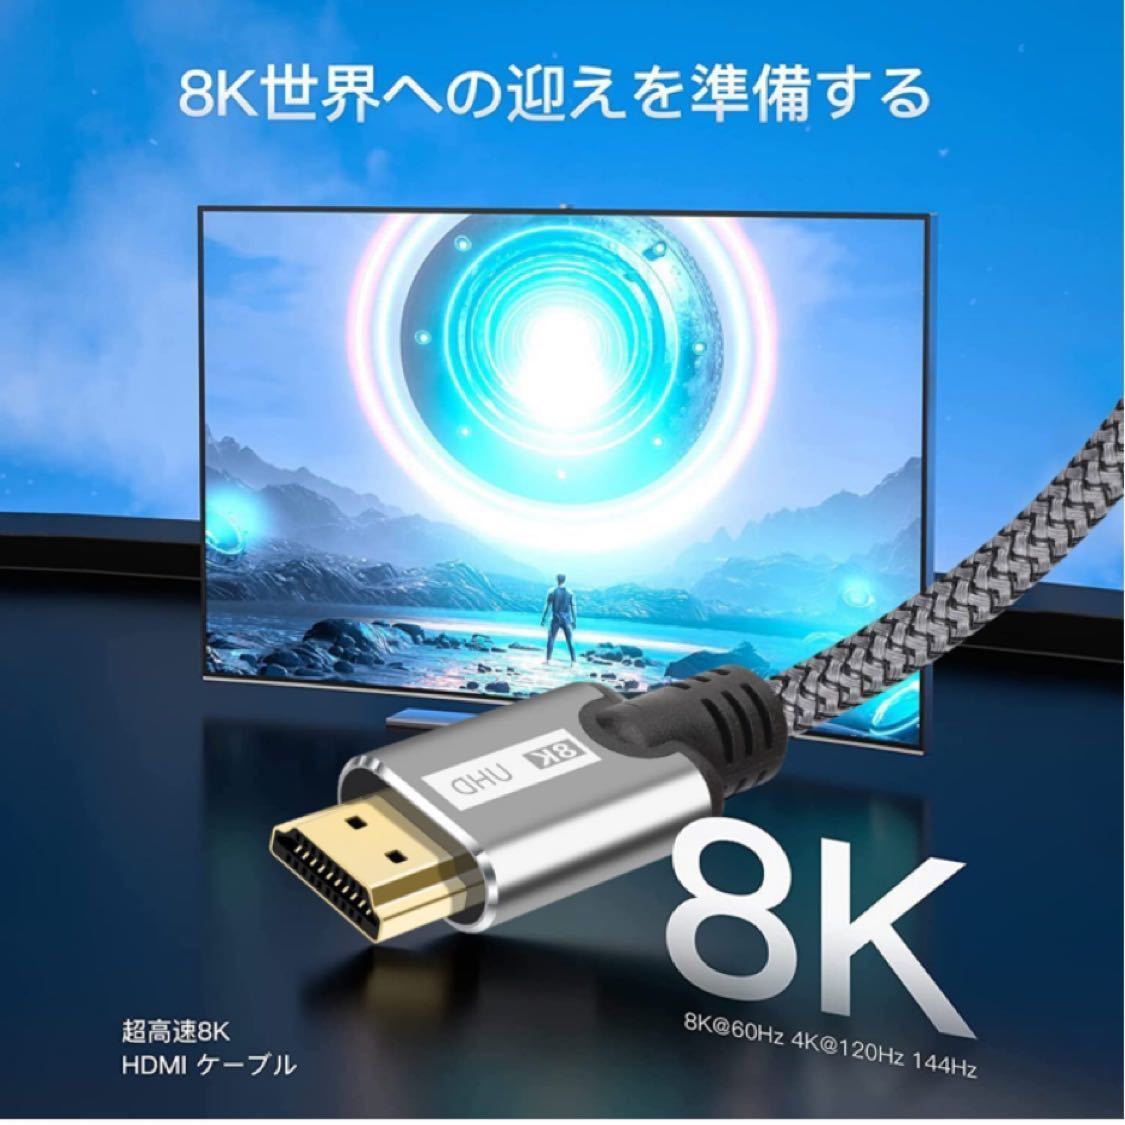 8K HDMI ケーブル 2.1【1Mアップグレード版】MEEKI HDMI 2.1規格 8K@60Hz 4K@120Hz/144Hz 48Gbps超高速高耐久 (グレー)_画像4